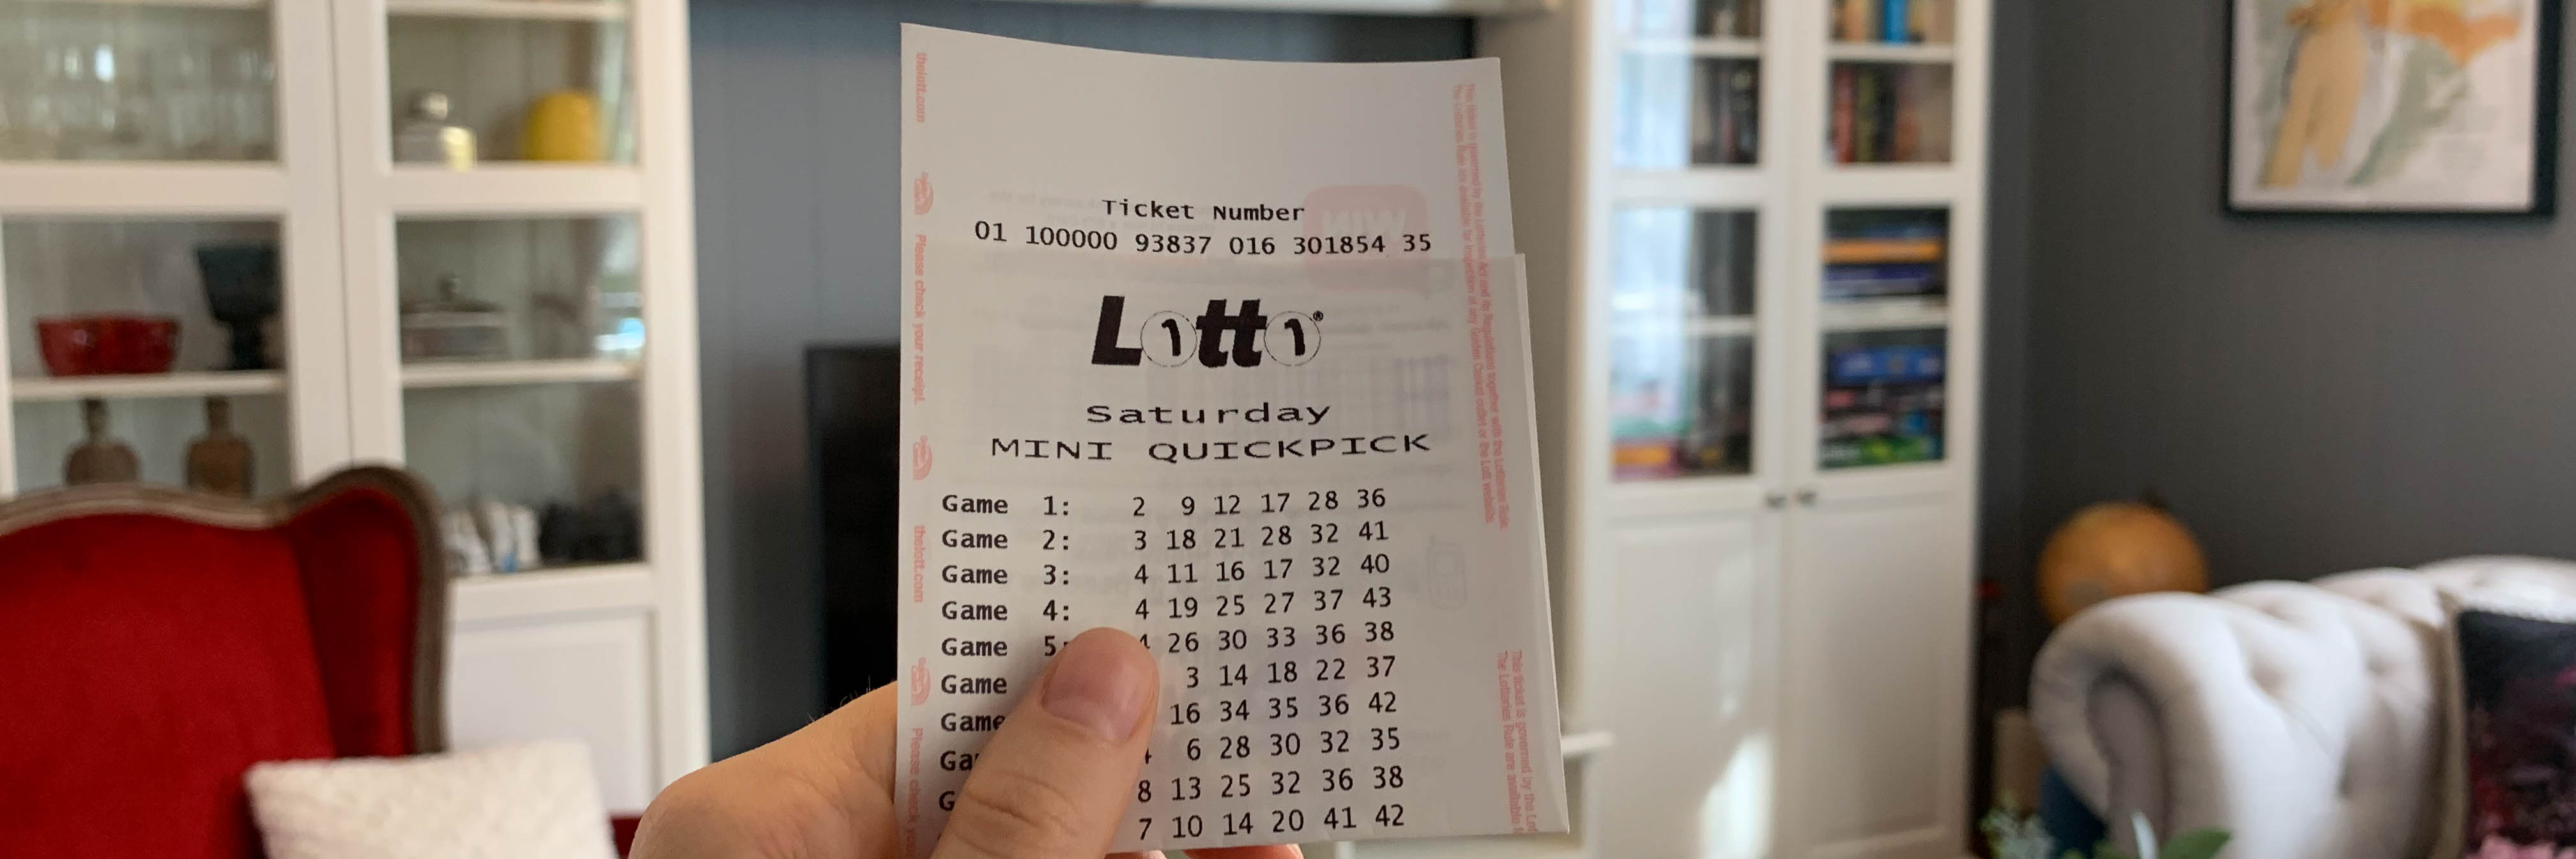 last saturday lotto winning numbers